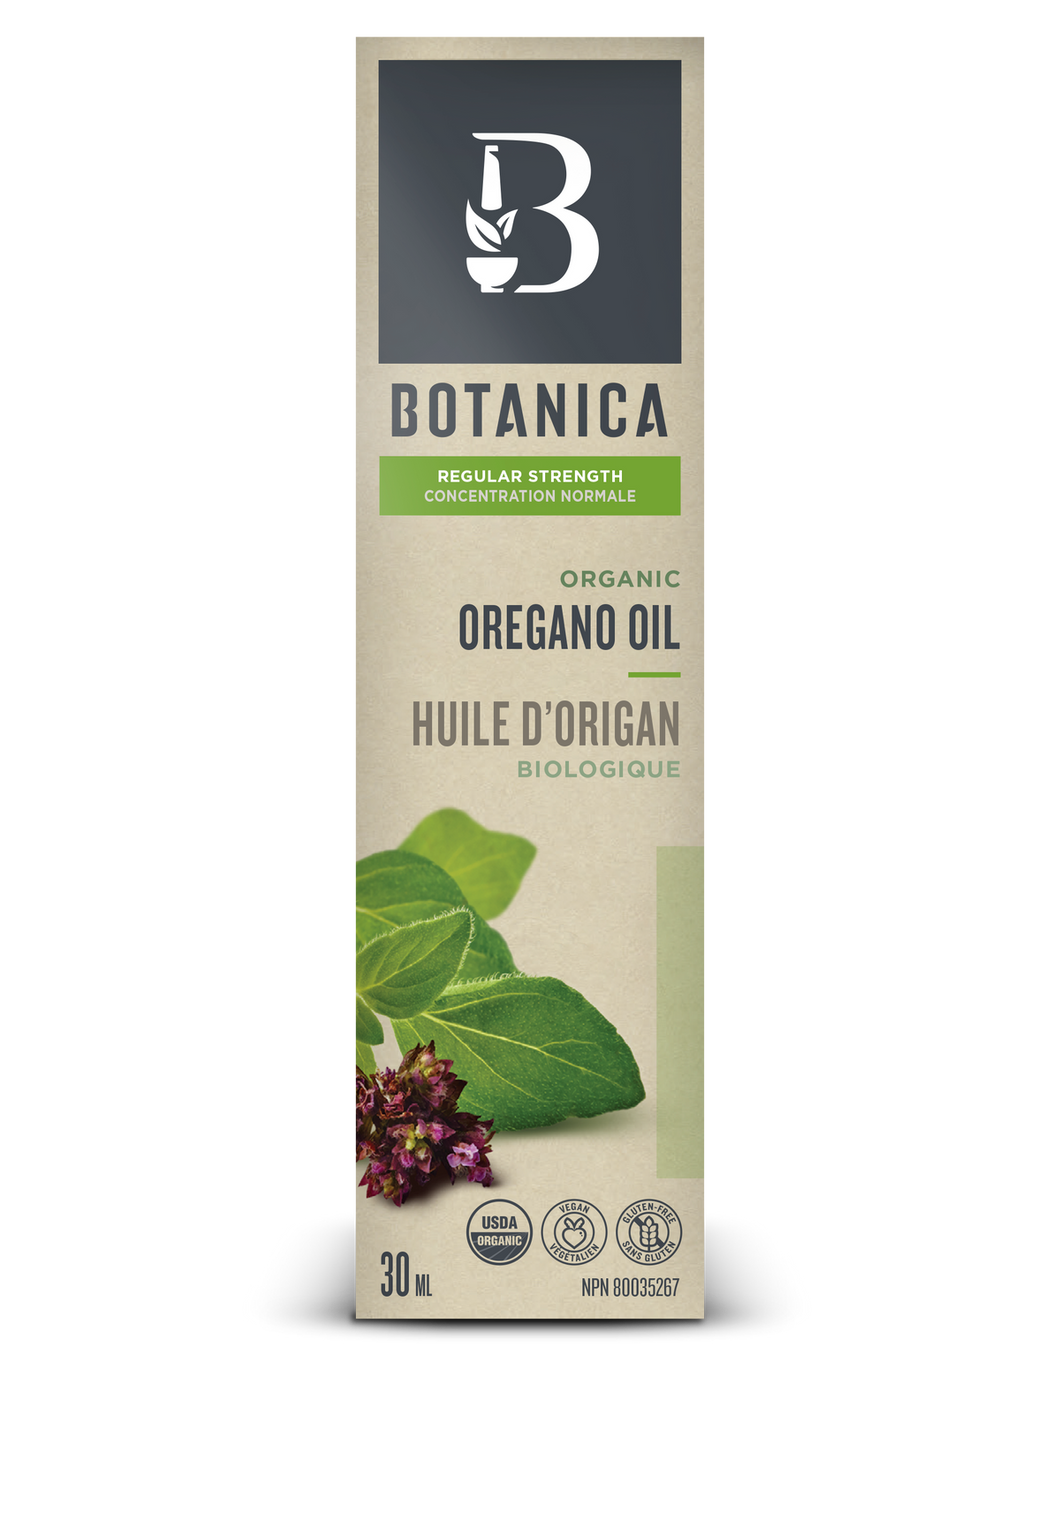 Botanica Organic Oregano Oil Regular Strength 1:3 30ml